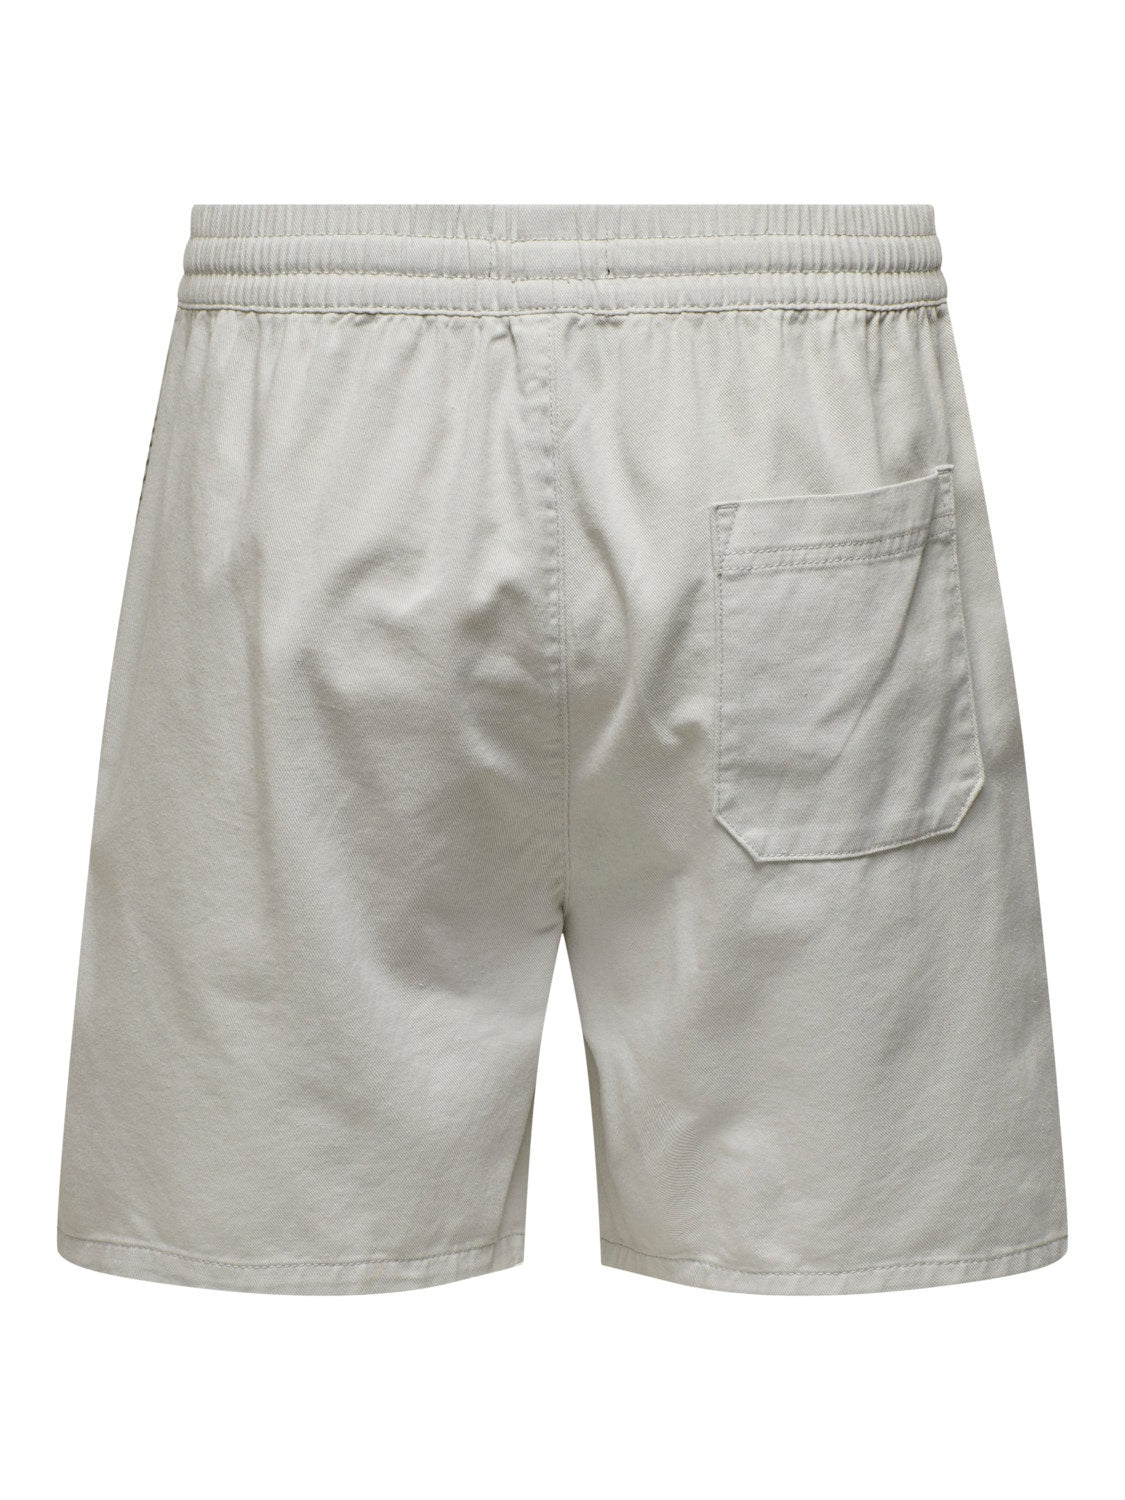 shorts-basic-22025790-only-sons-dm2-shop-05